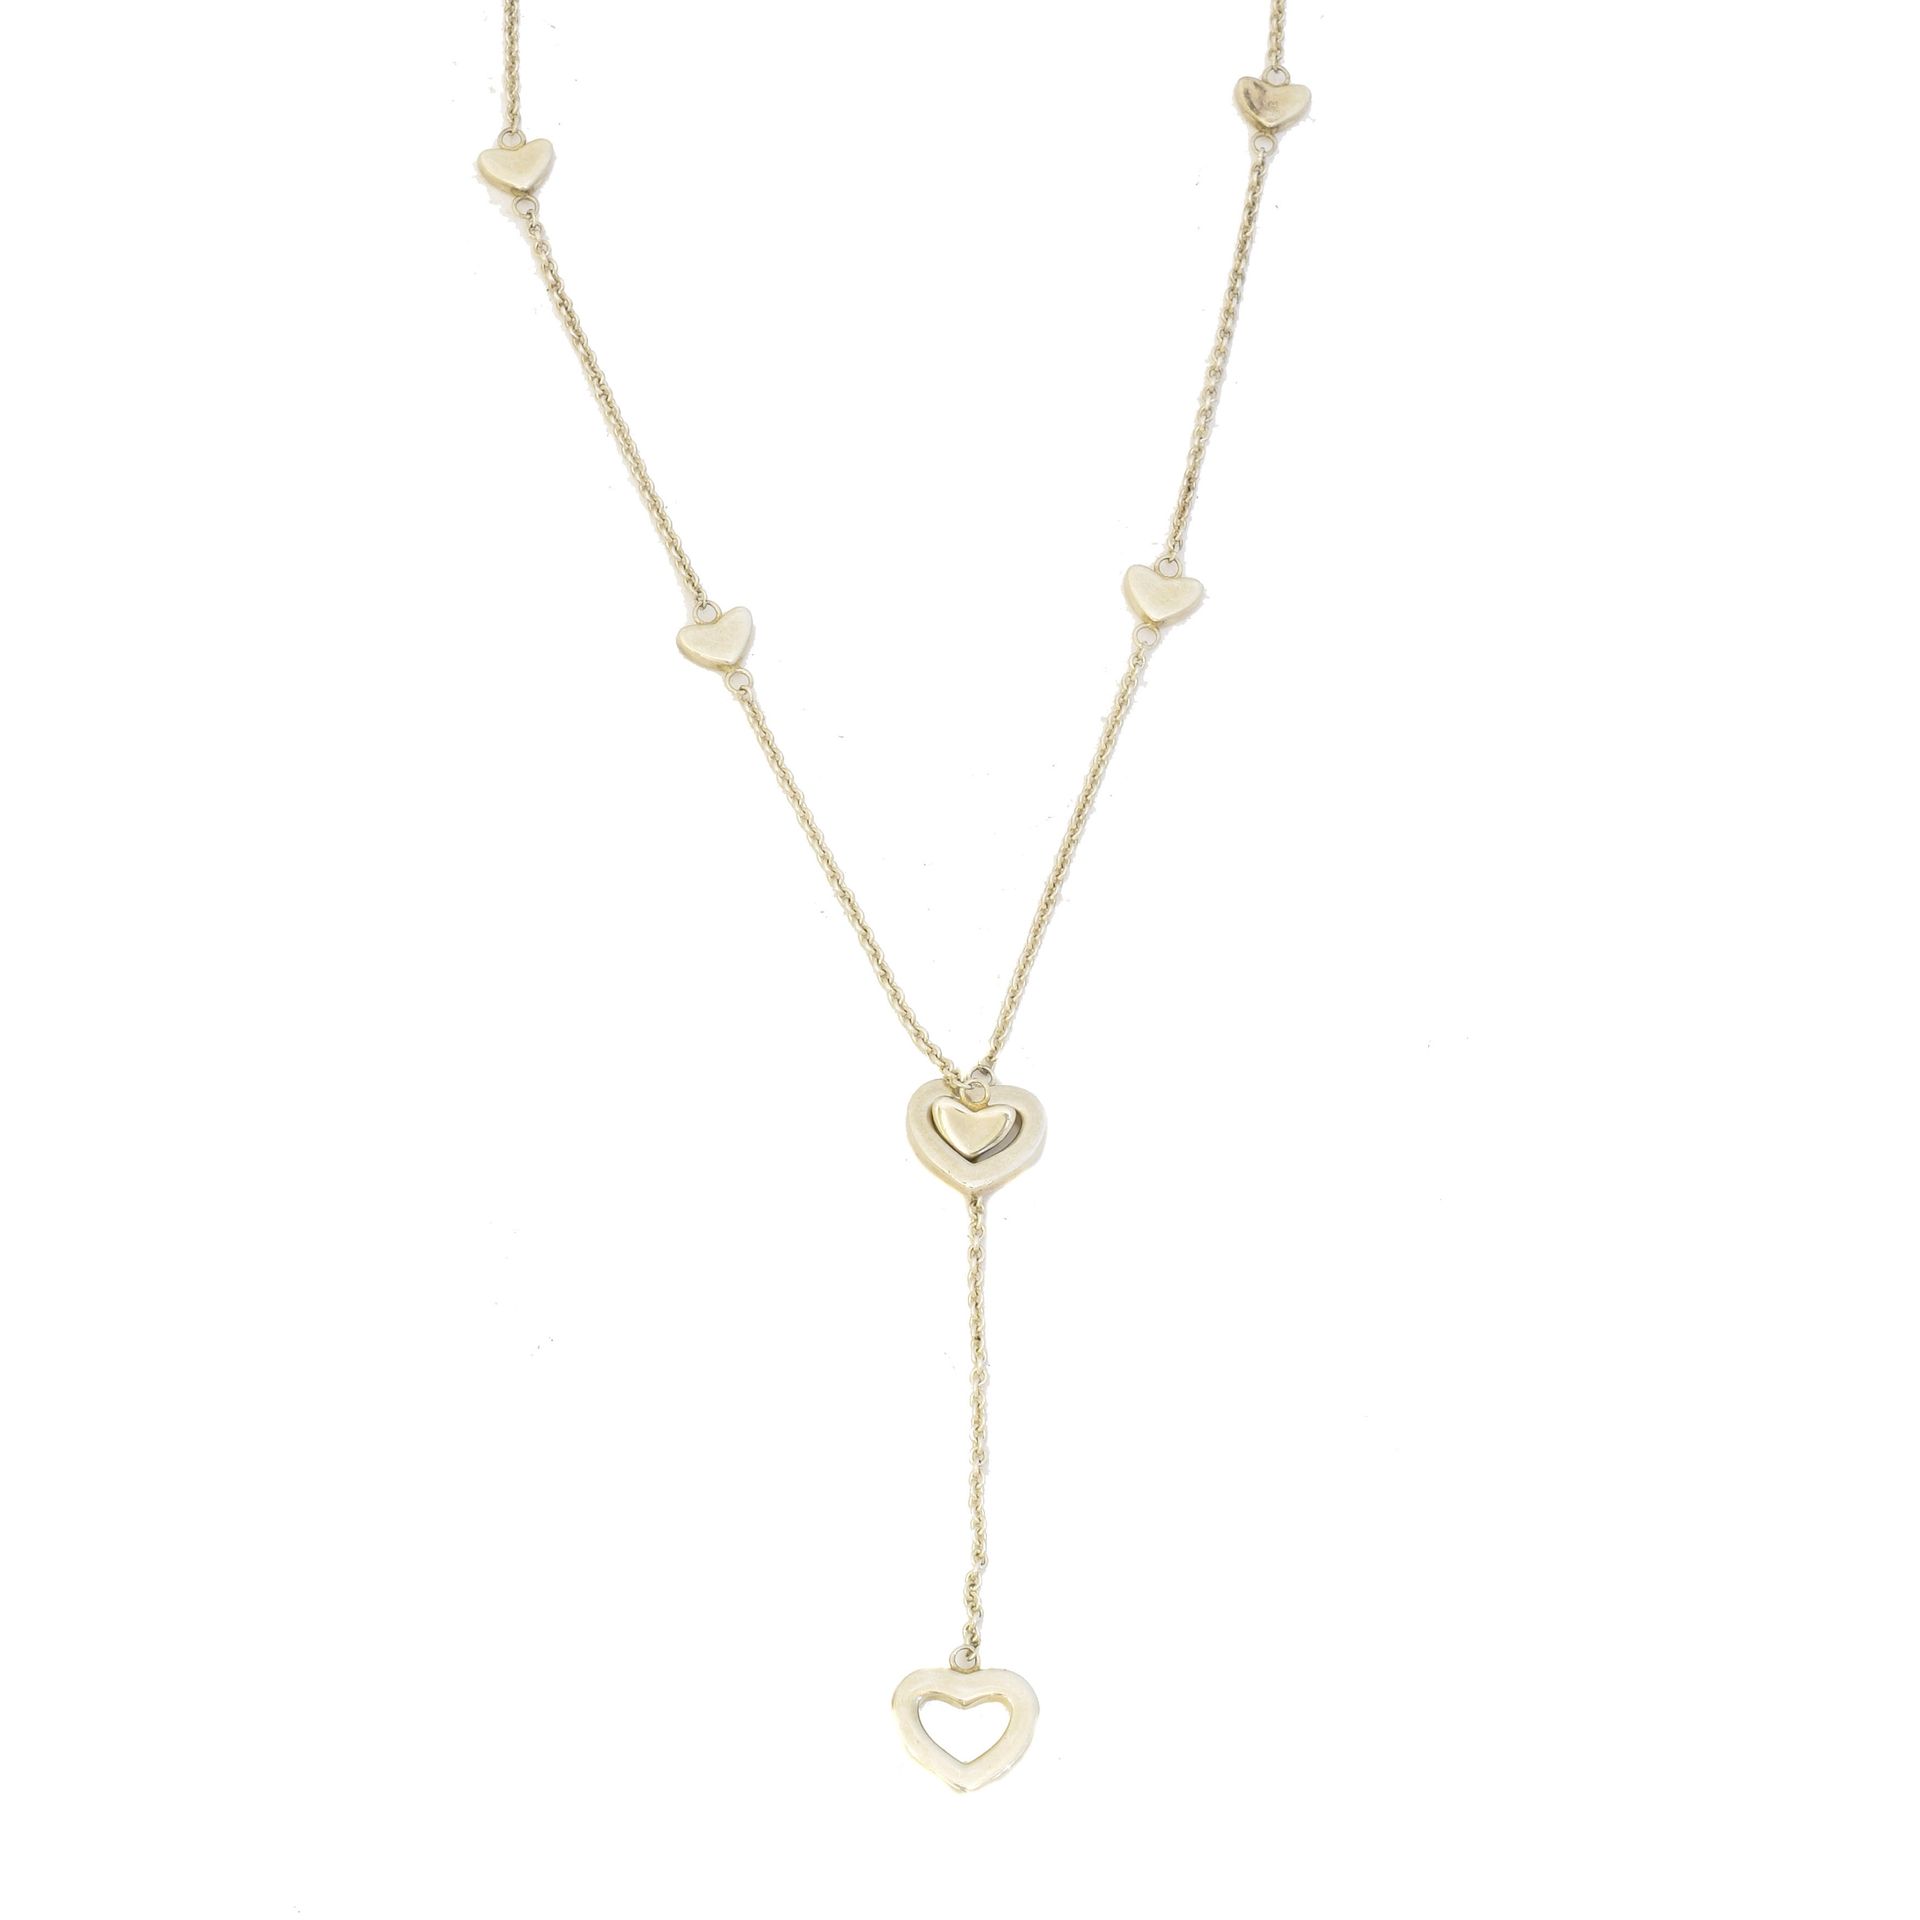 A Tiffany & Co. 'Heart' lariat necklace, 
Una collana
lariat Tiffany & Co. 'Hear&hellip;